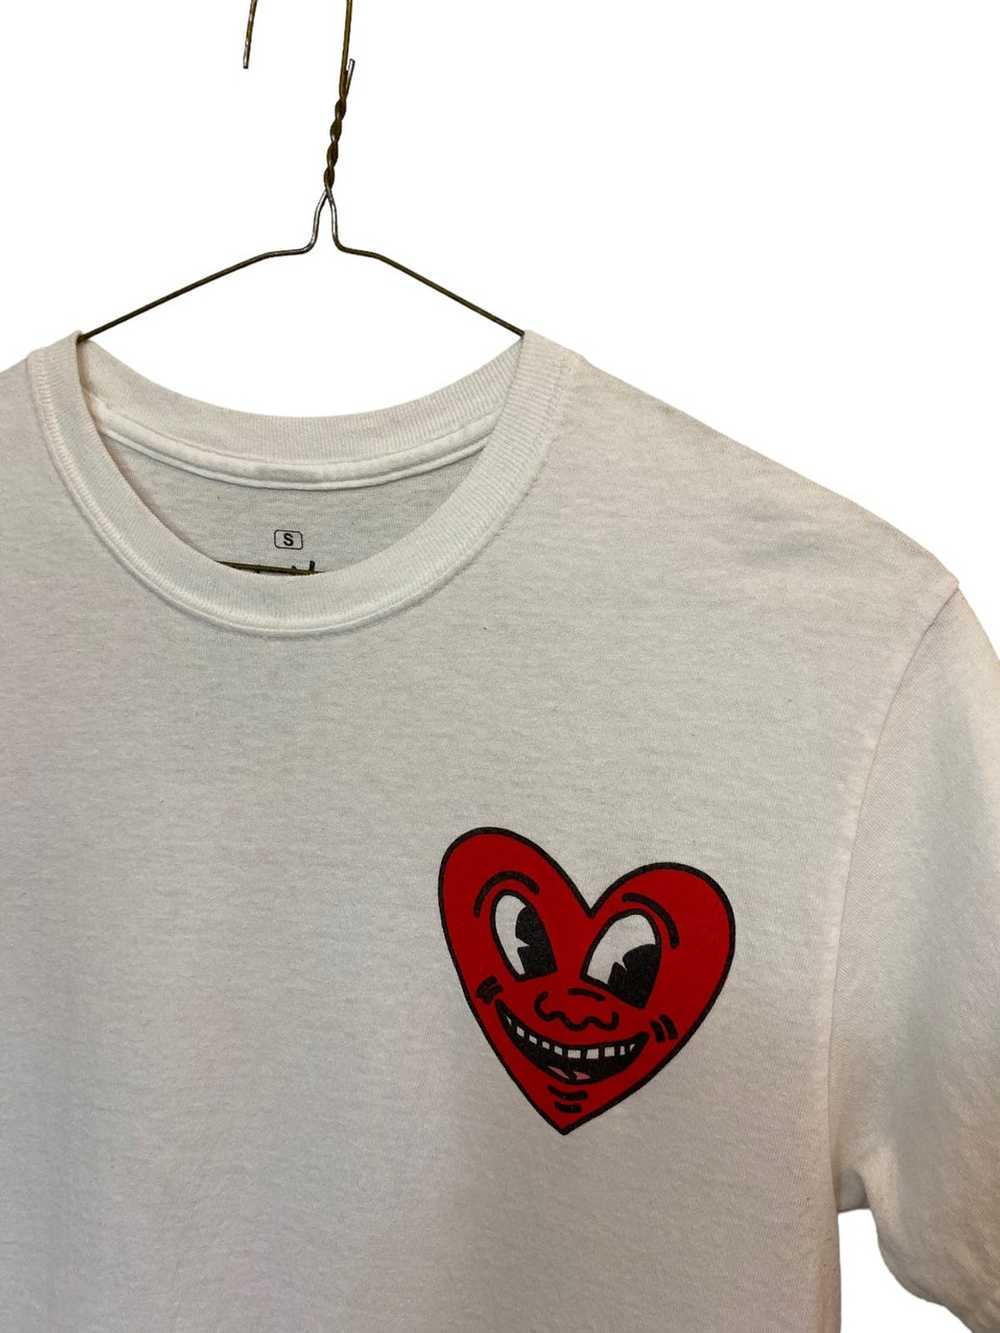 Art × Keith Haring Kieth Haring Heart Art T Shirt - image 4